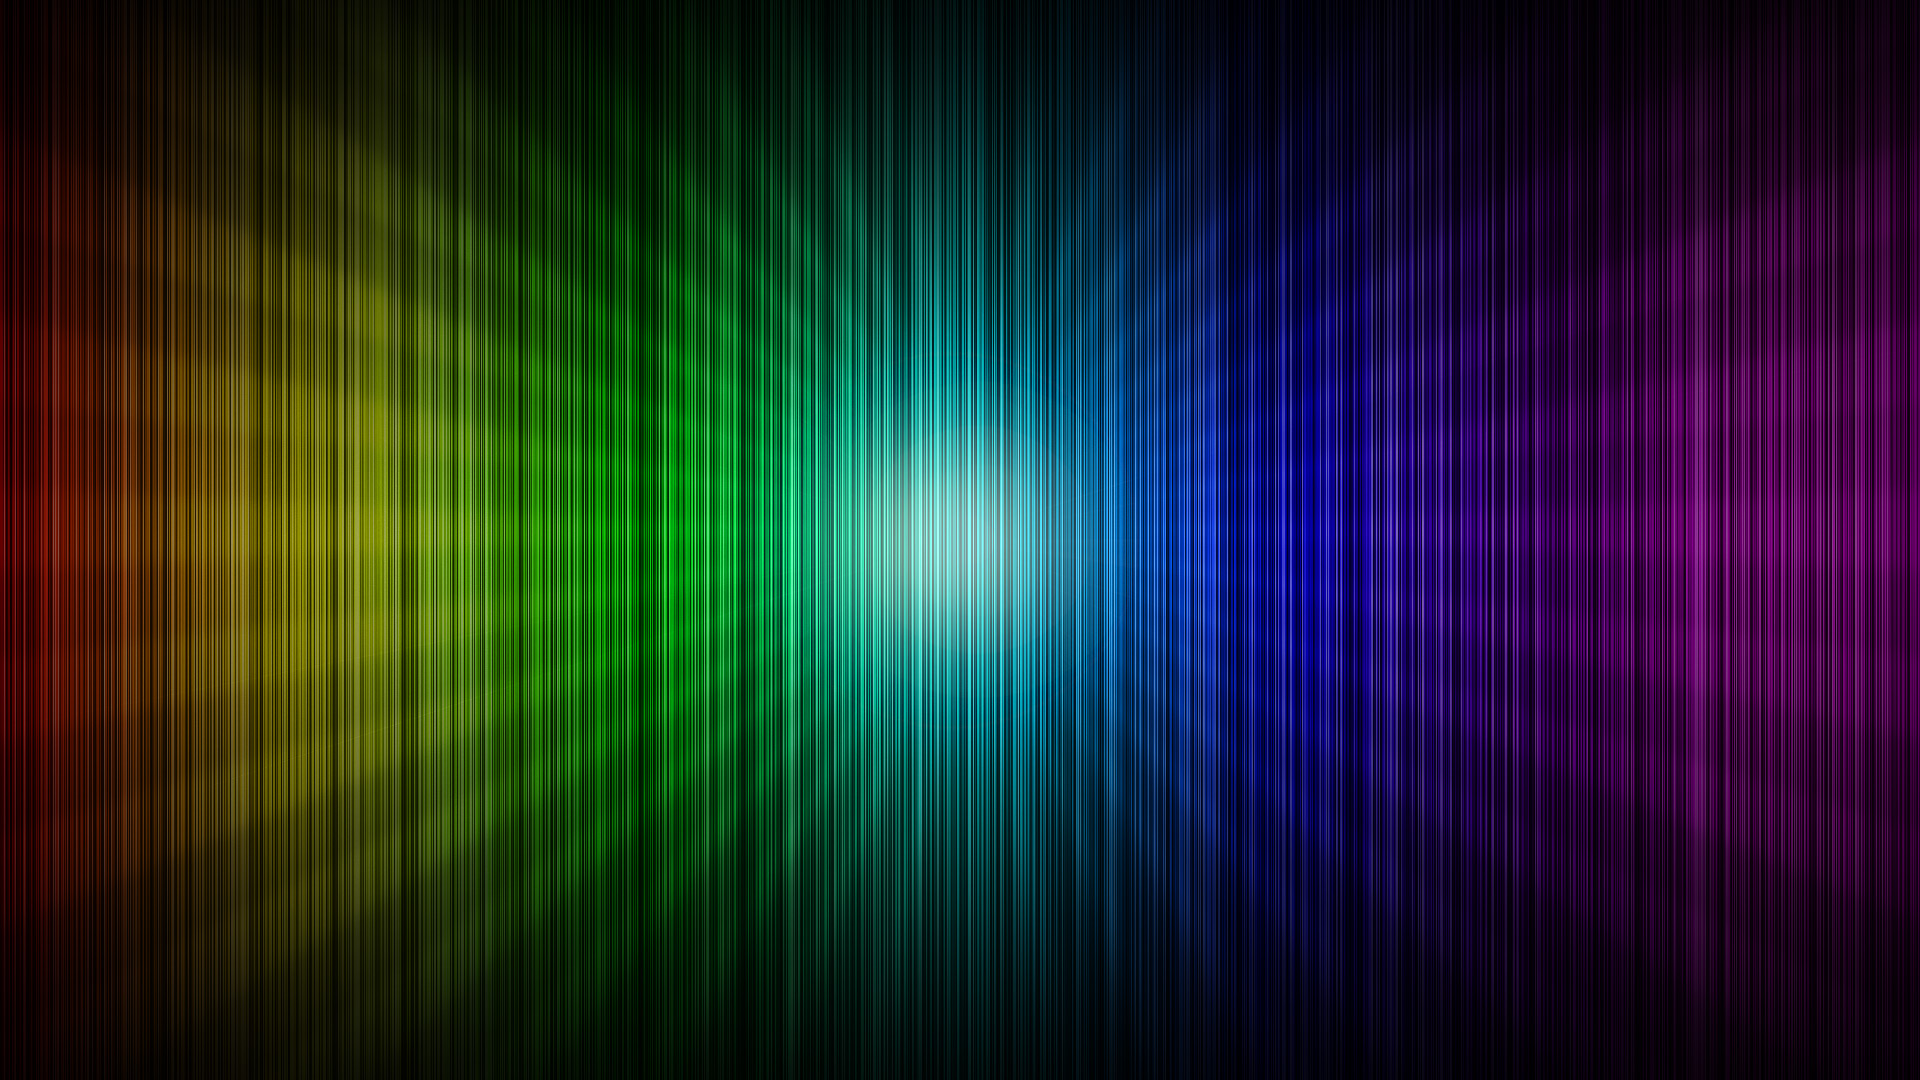 Creating A Hires Rainbow Wallpaper